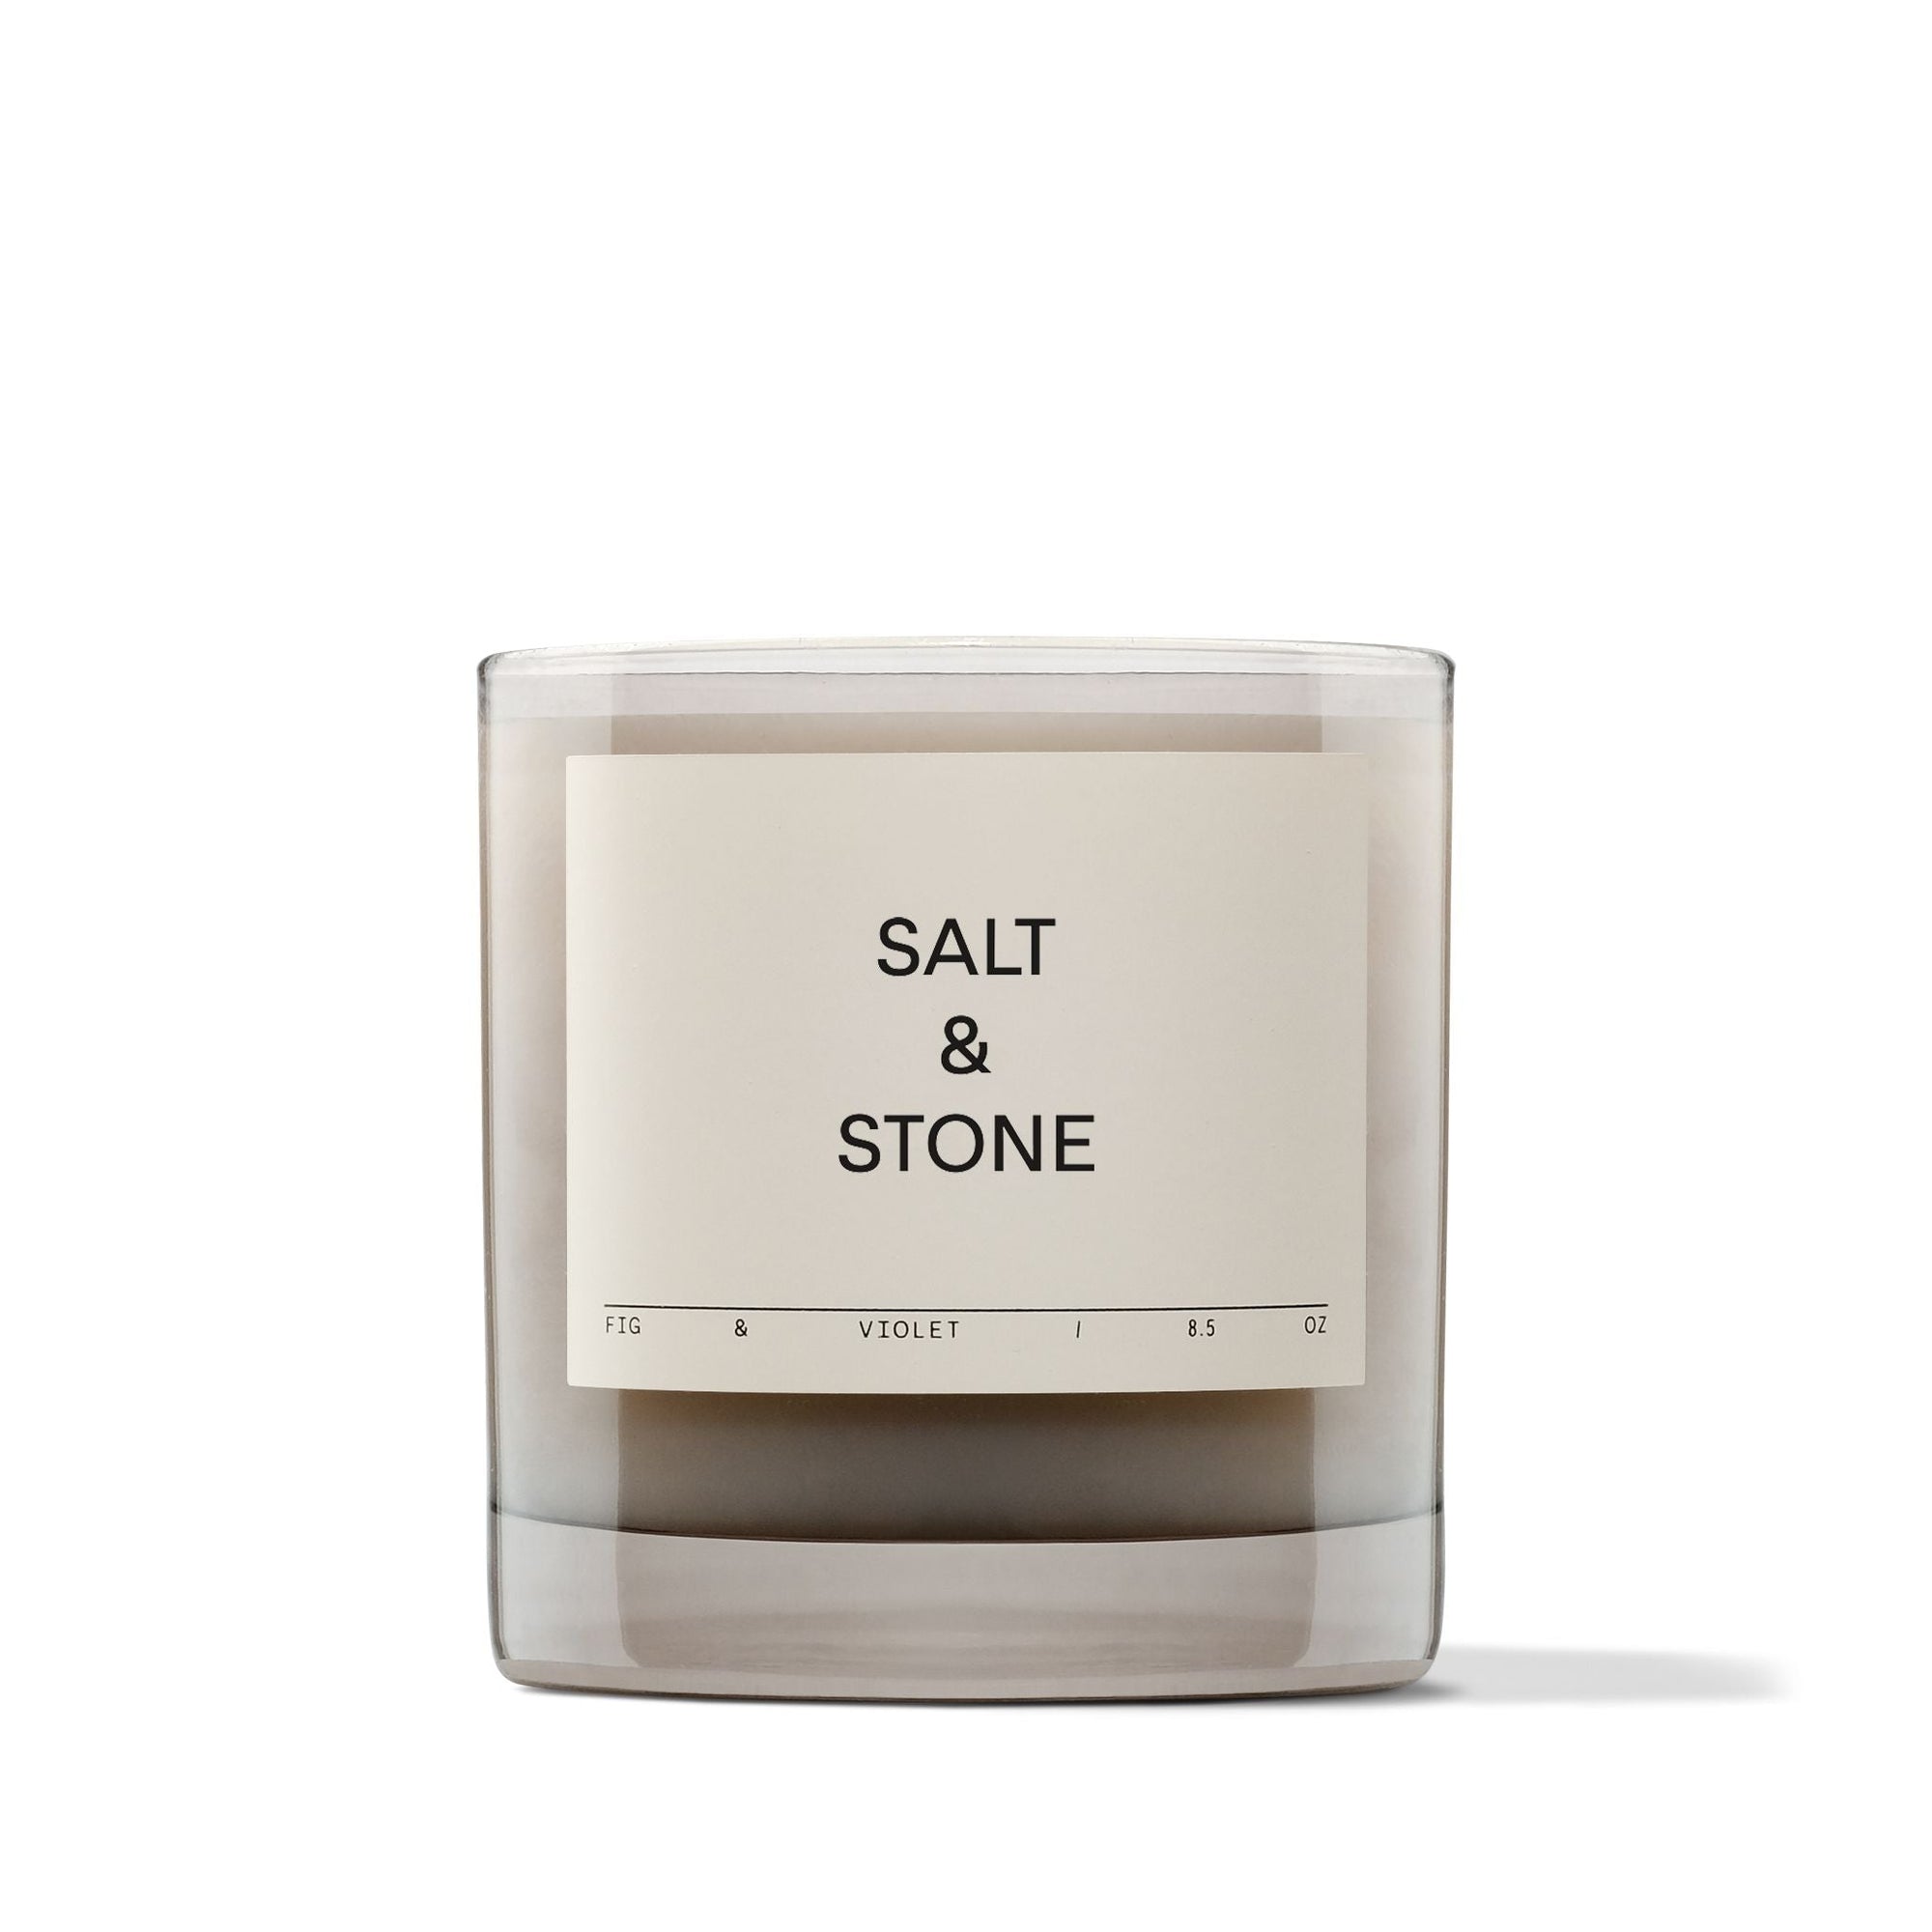 Salt & Stone - Salt & Stone Candle - Fig + Violet - ORESTA clean beauty simplified